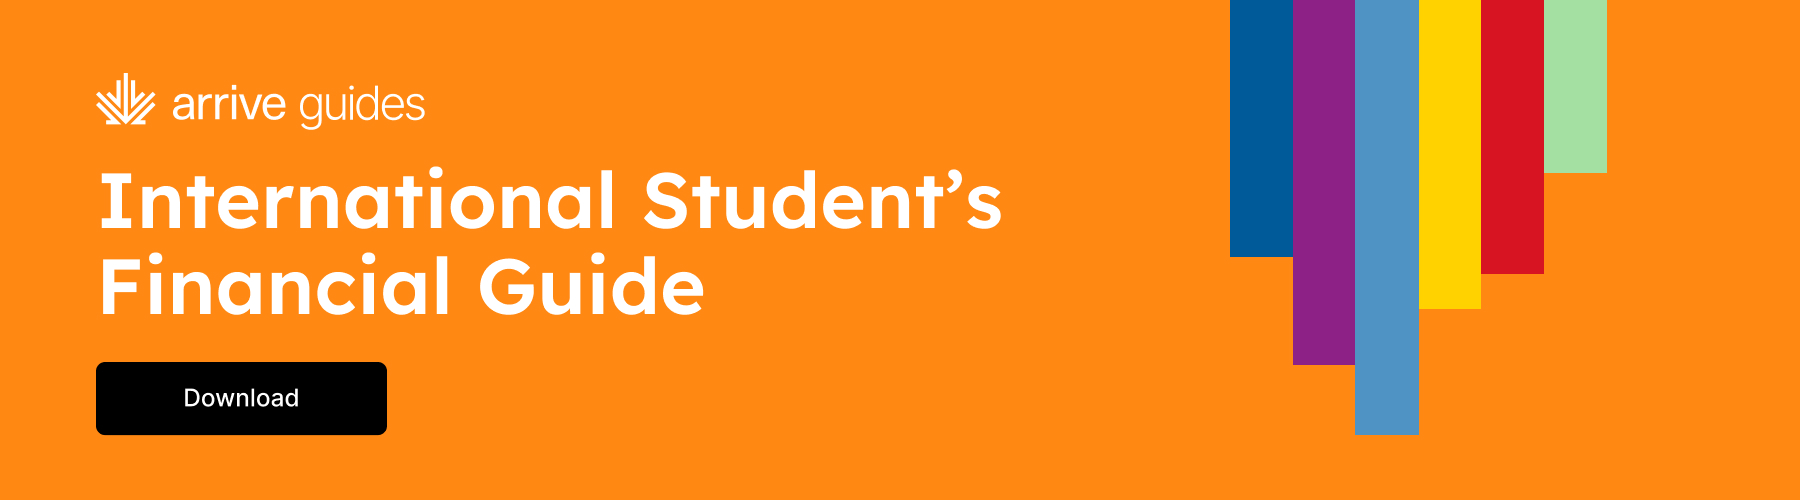 International Student's Financial Guide banner